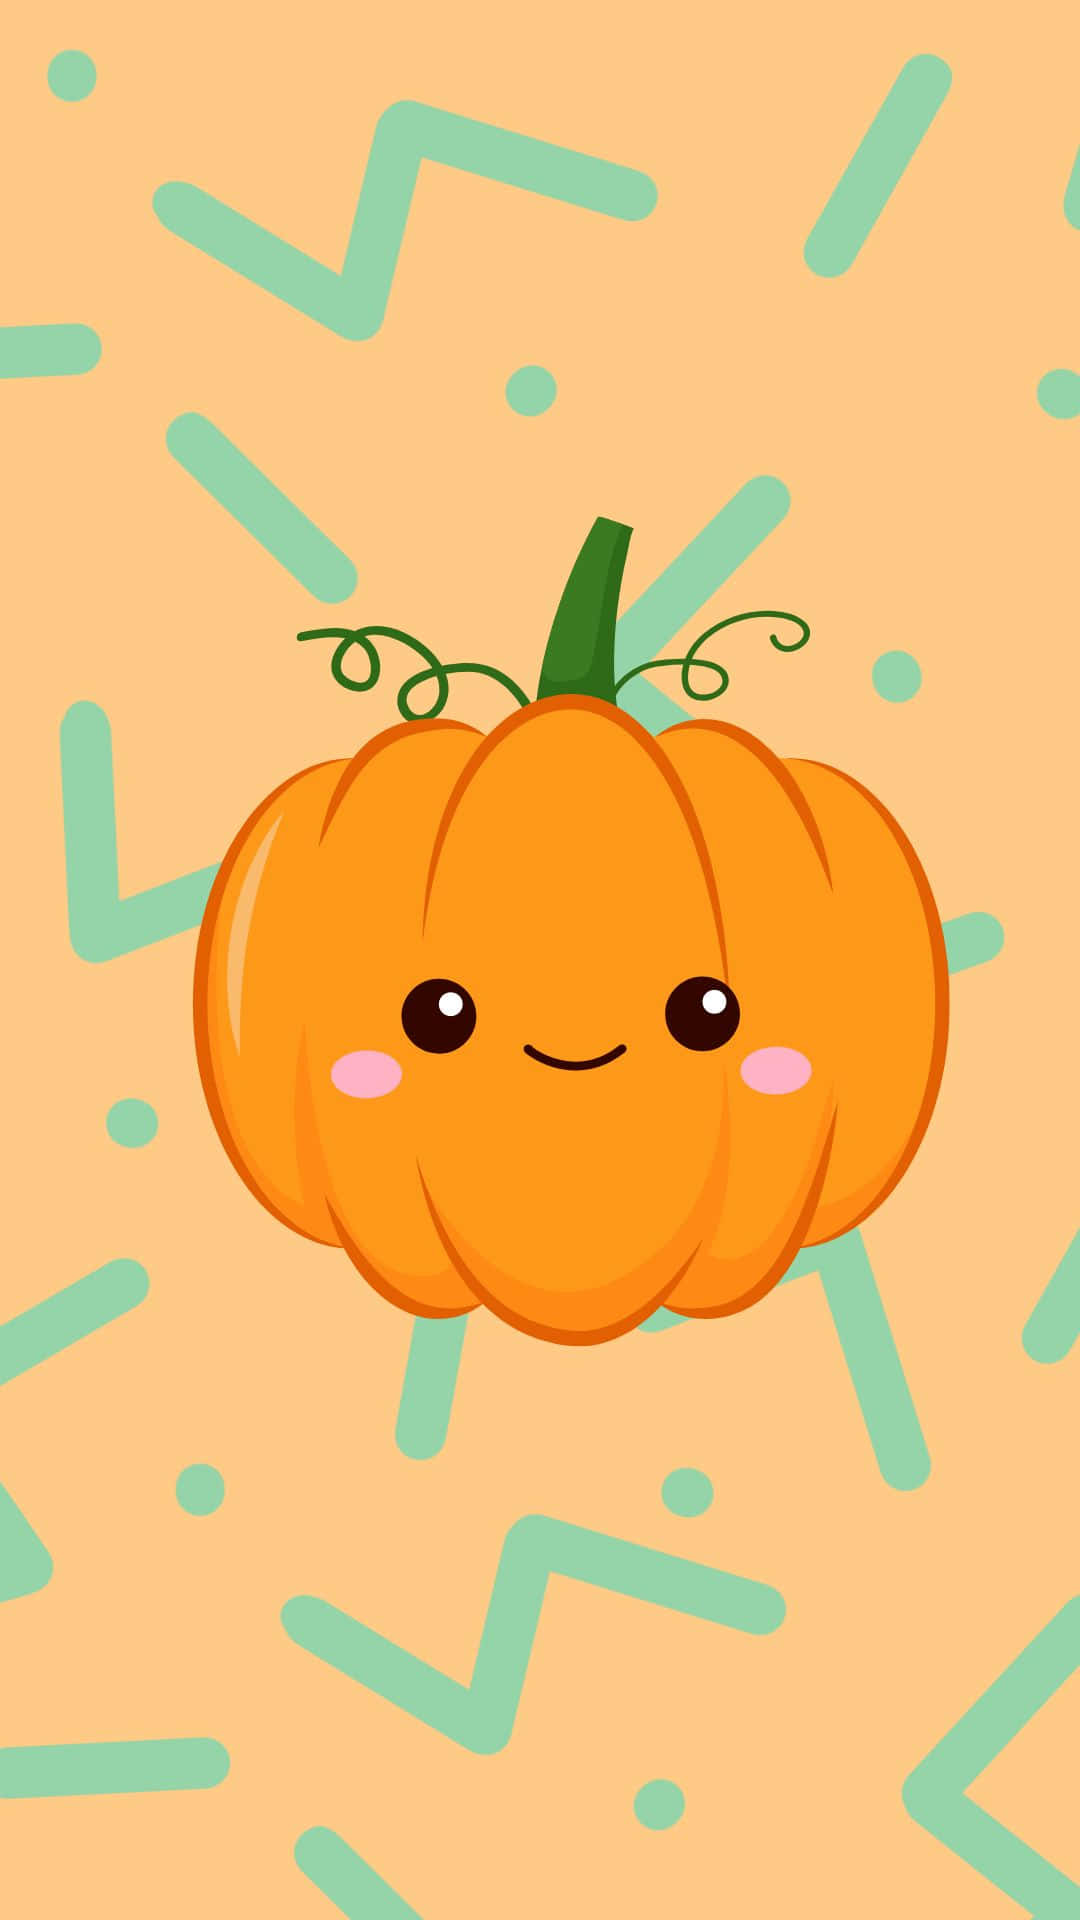 Adorable Little Pumpkin with a Big Smile Wallpaper